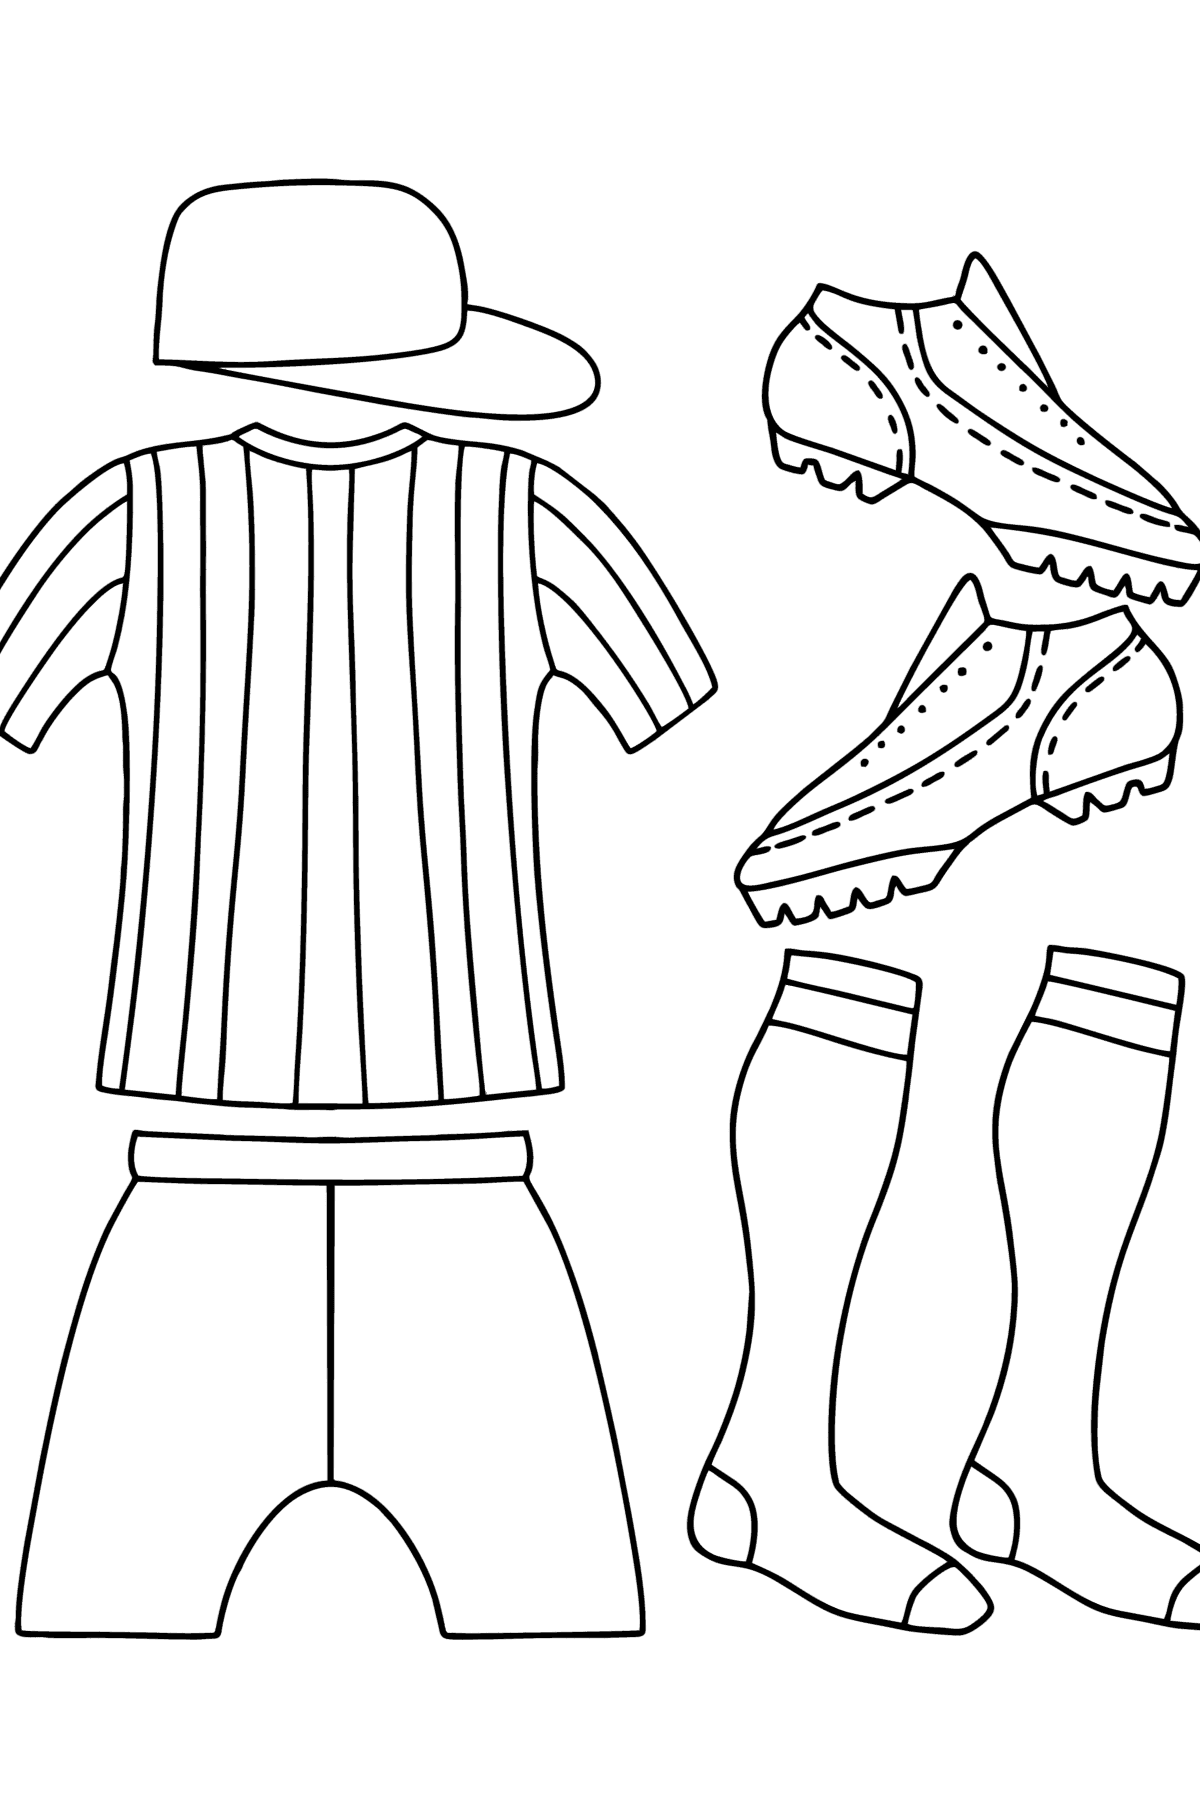 Värityskuva UEFA:n erotuomarin univormu - Värityskuvat lapsille